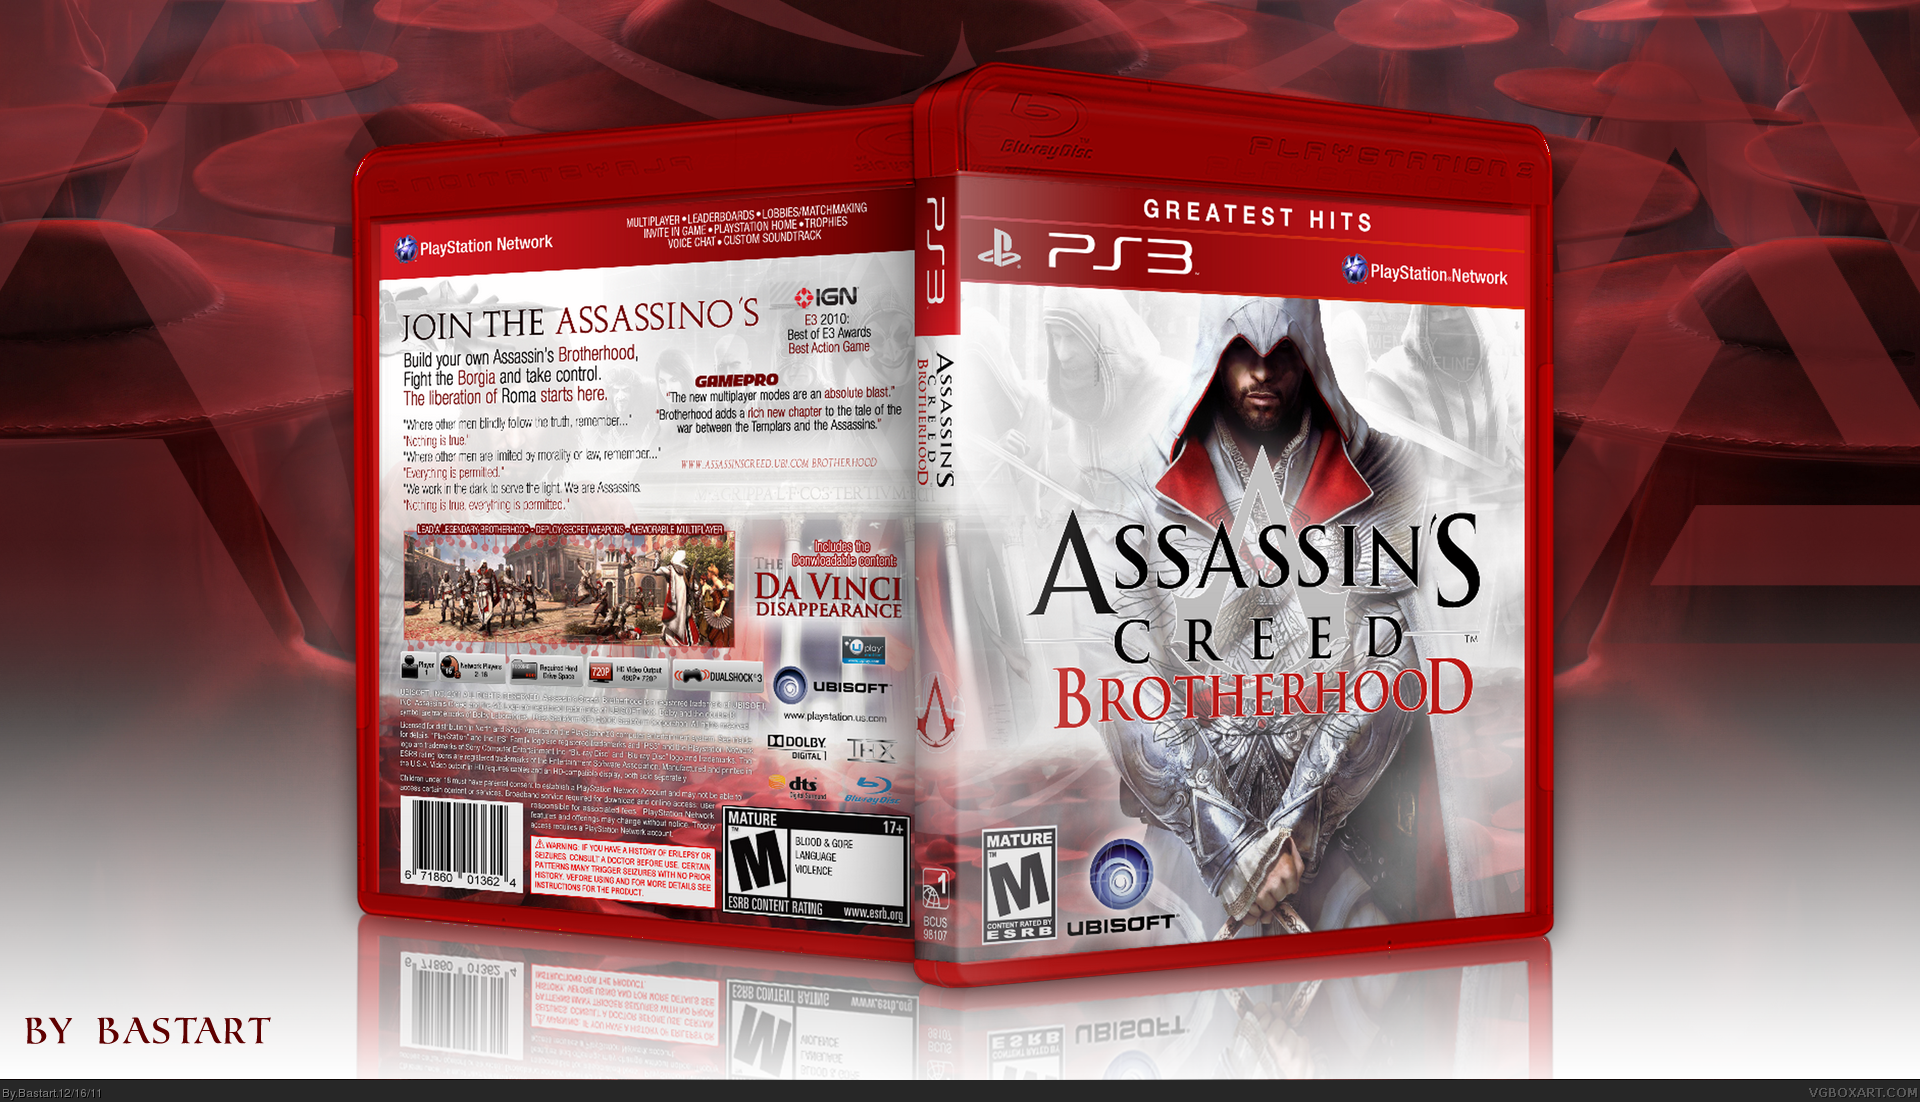 Assassin's Creed Brotherhood ps3 обложка. PLAYSTATION 3 with Assassin's Creed Brotherhood. Creed "Greatest Hits, Vinyl".